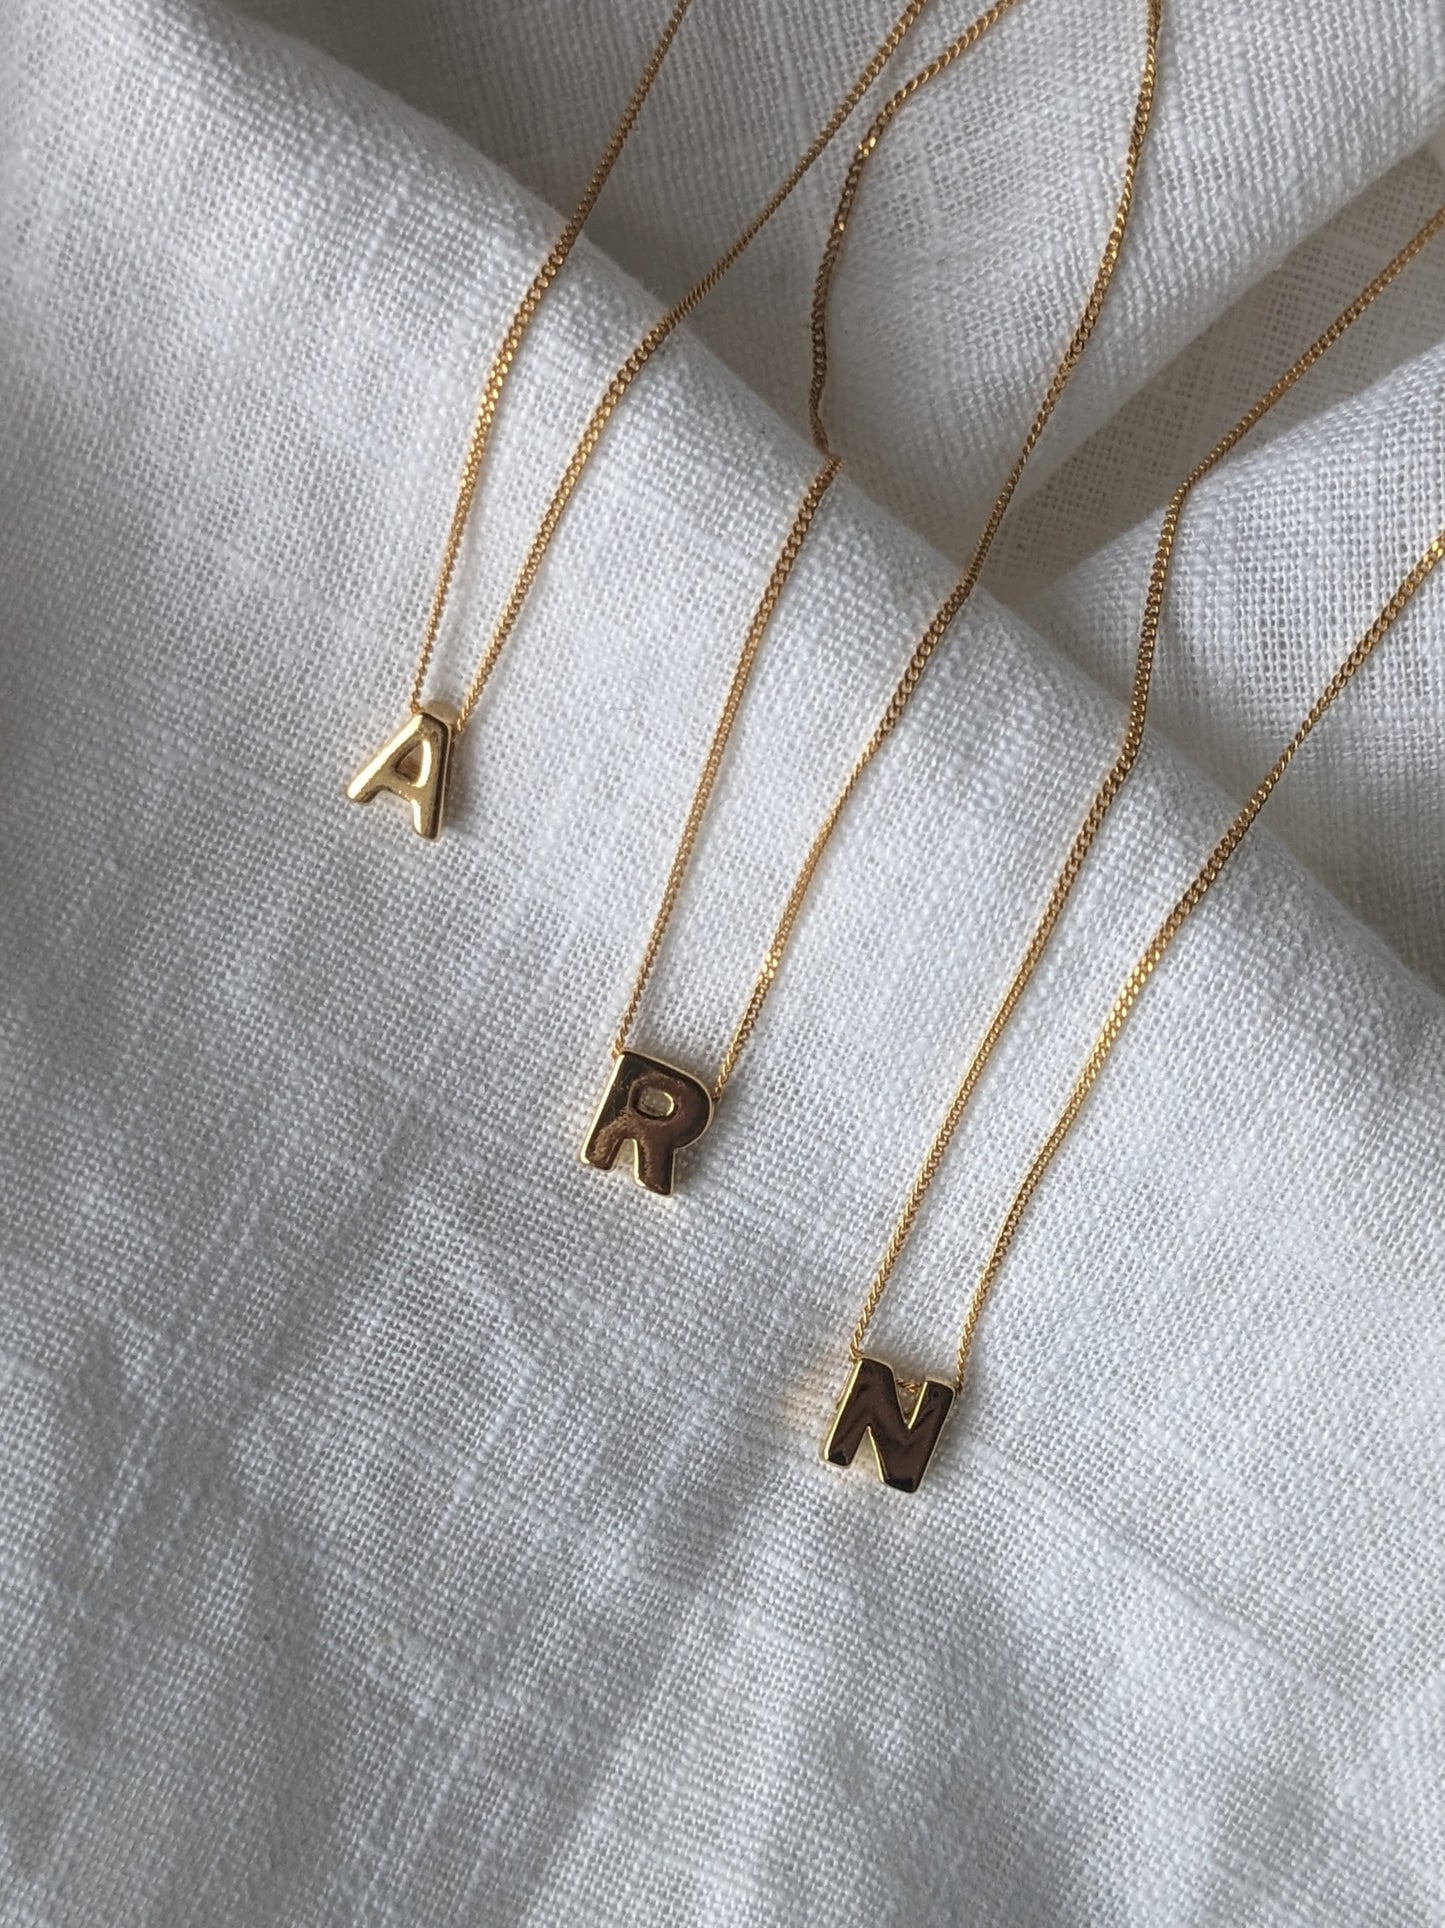 Inital Necklace - 18 Carat Gold Vermeil